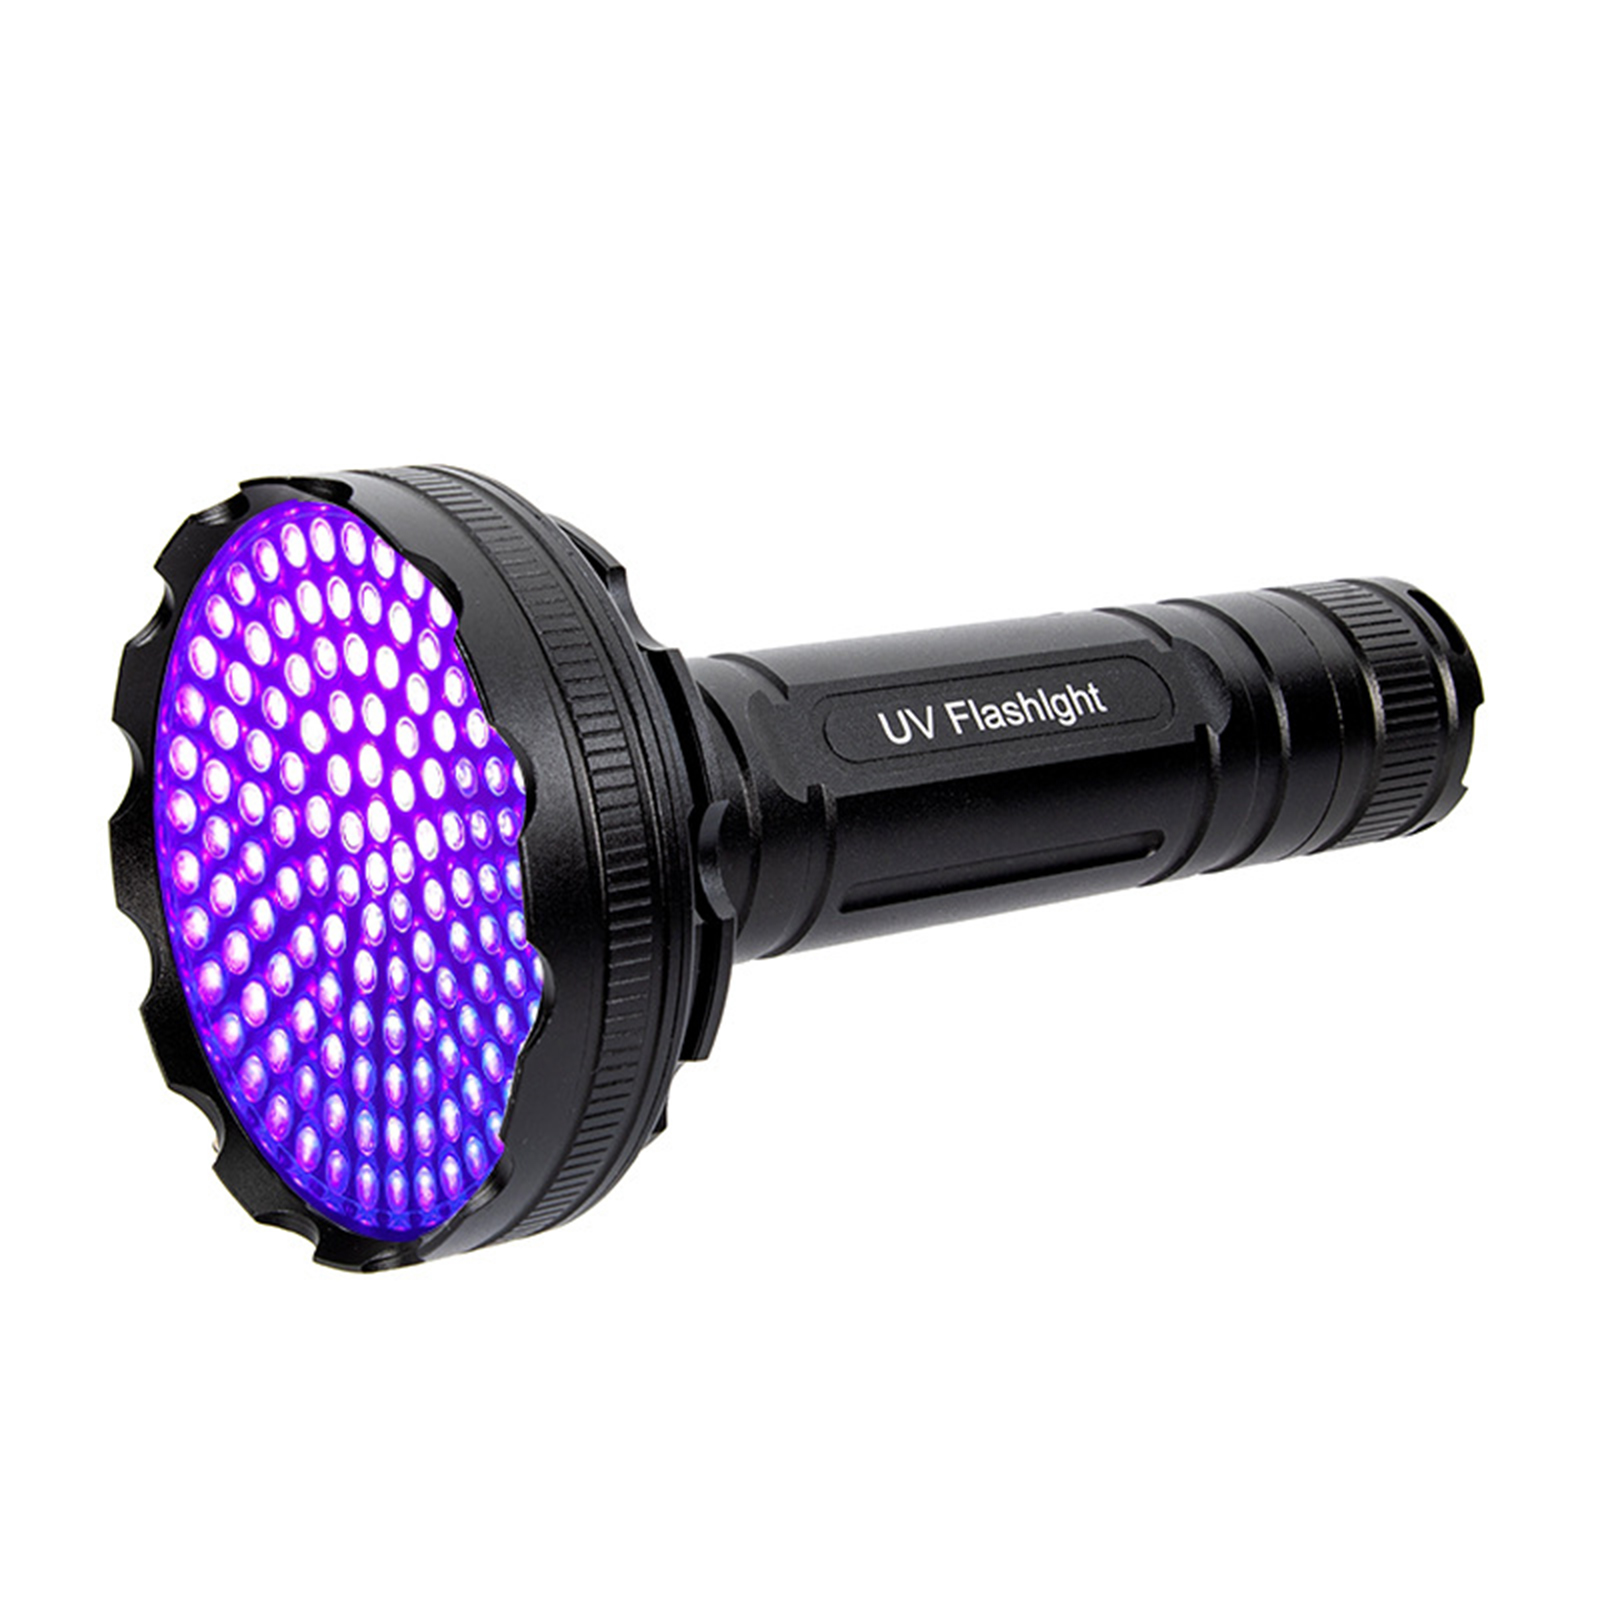 128LEDs UV Flashlight With Anti Slip Handle 395nm Wavelength High-strength Aluminum Alloy UV Torch Tool For Money Jewelleries Collections UV Flashlight